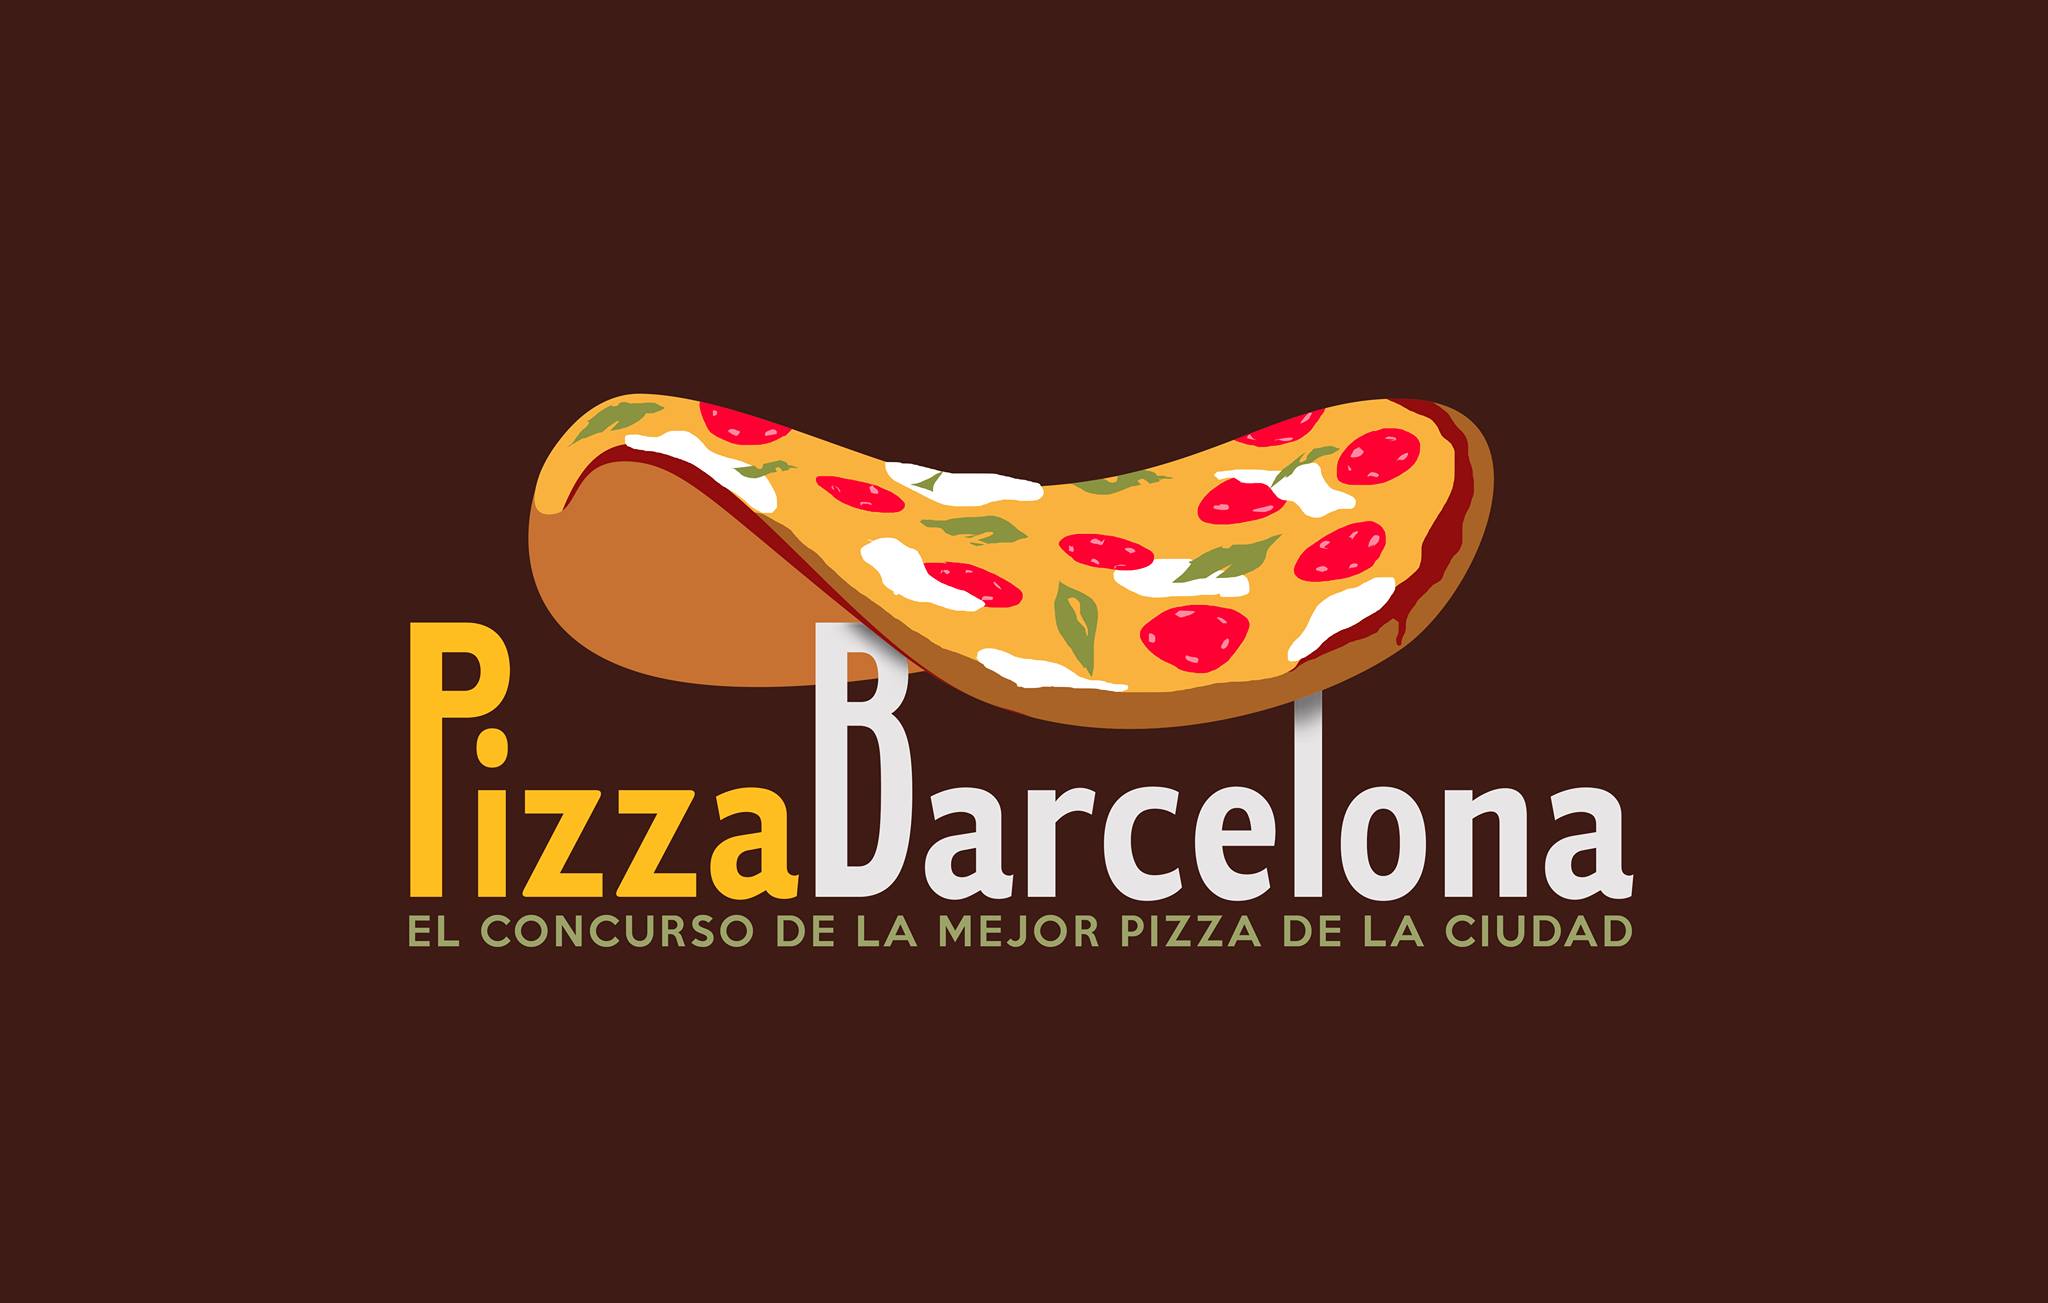 Pizzabarcelona_gusto